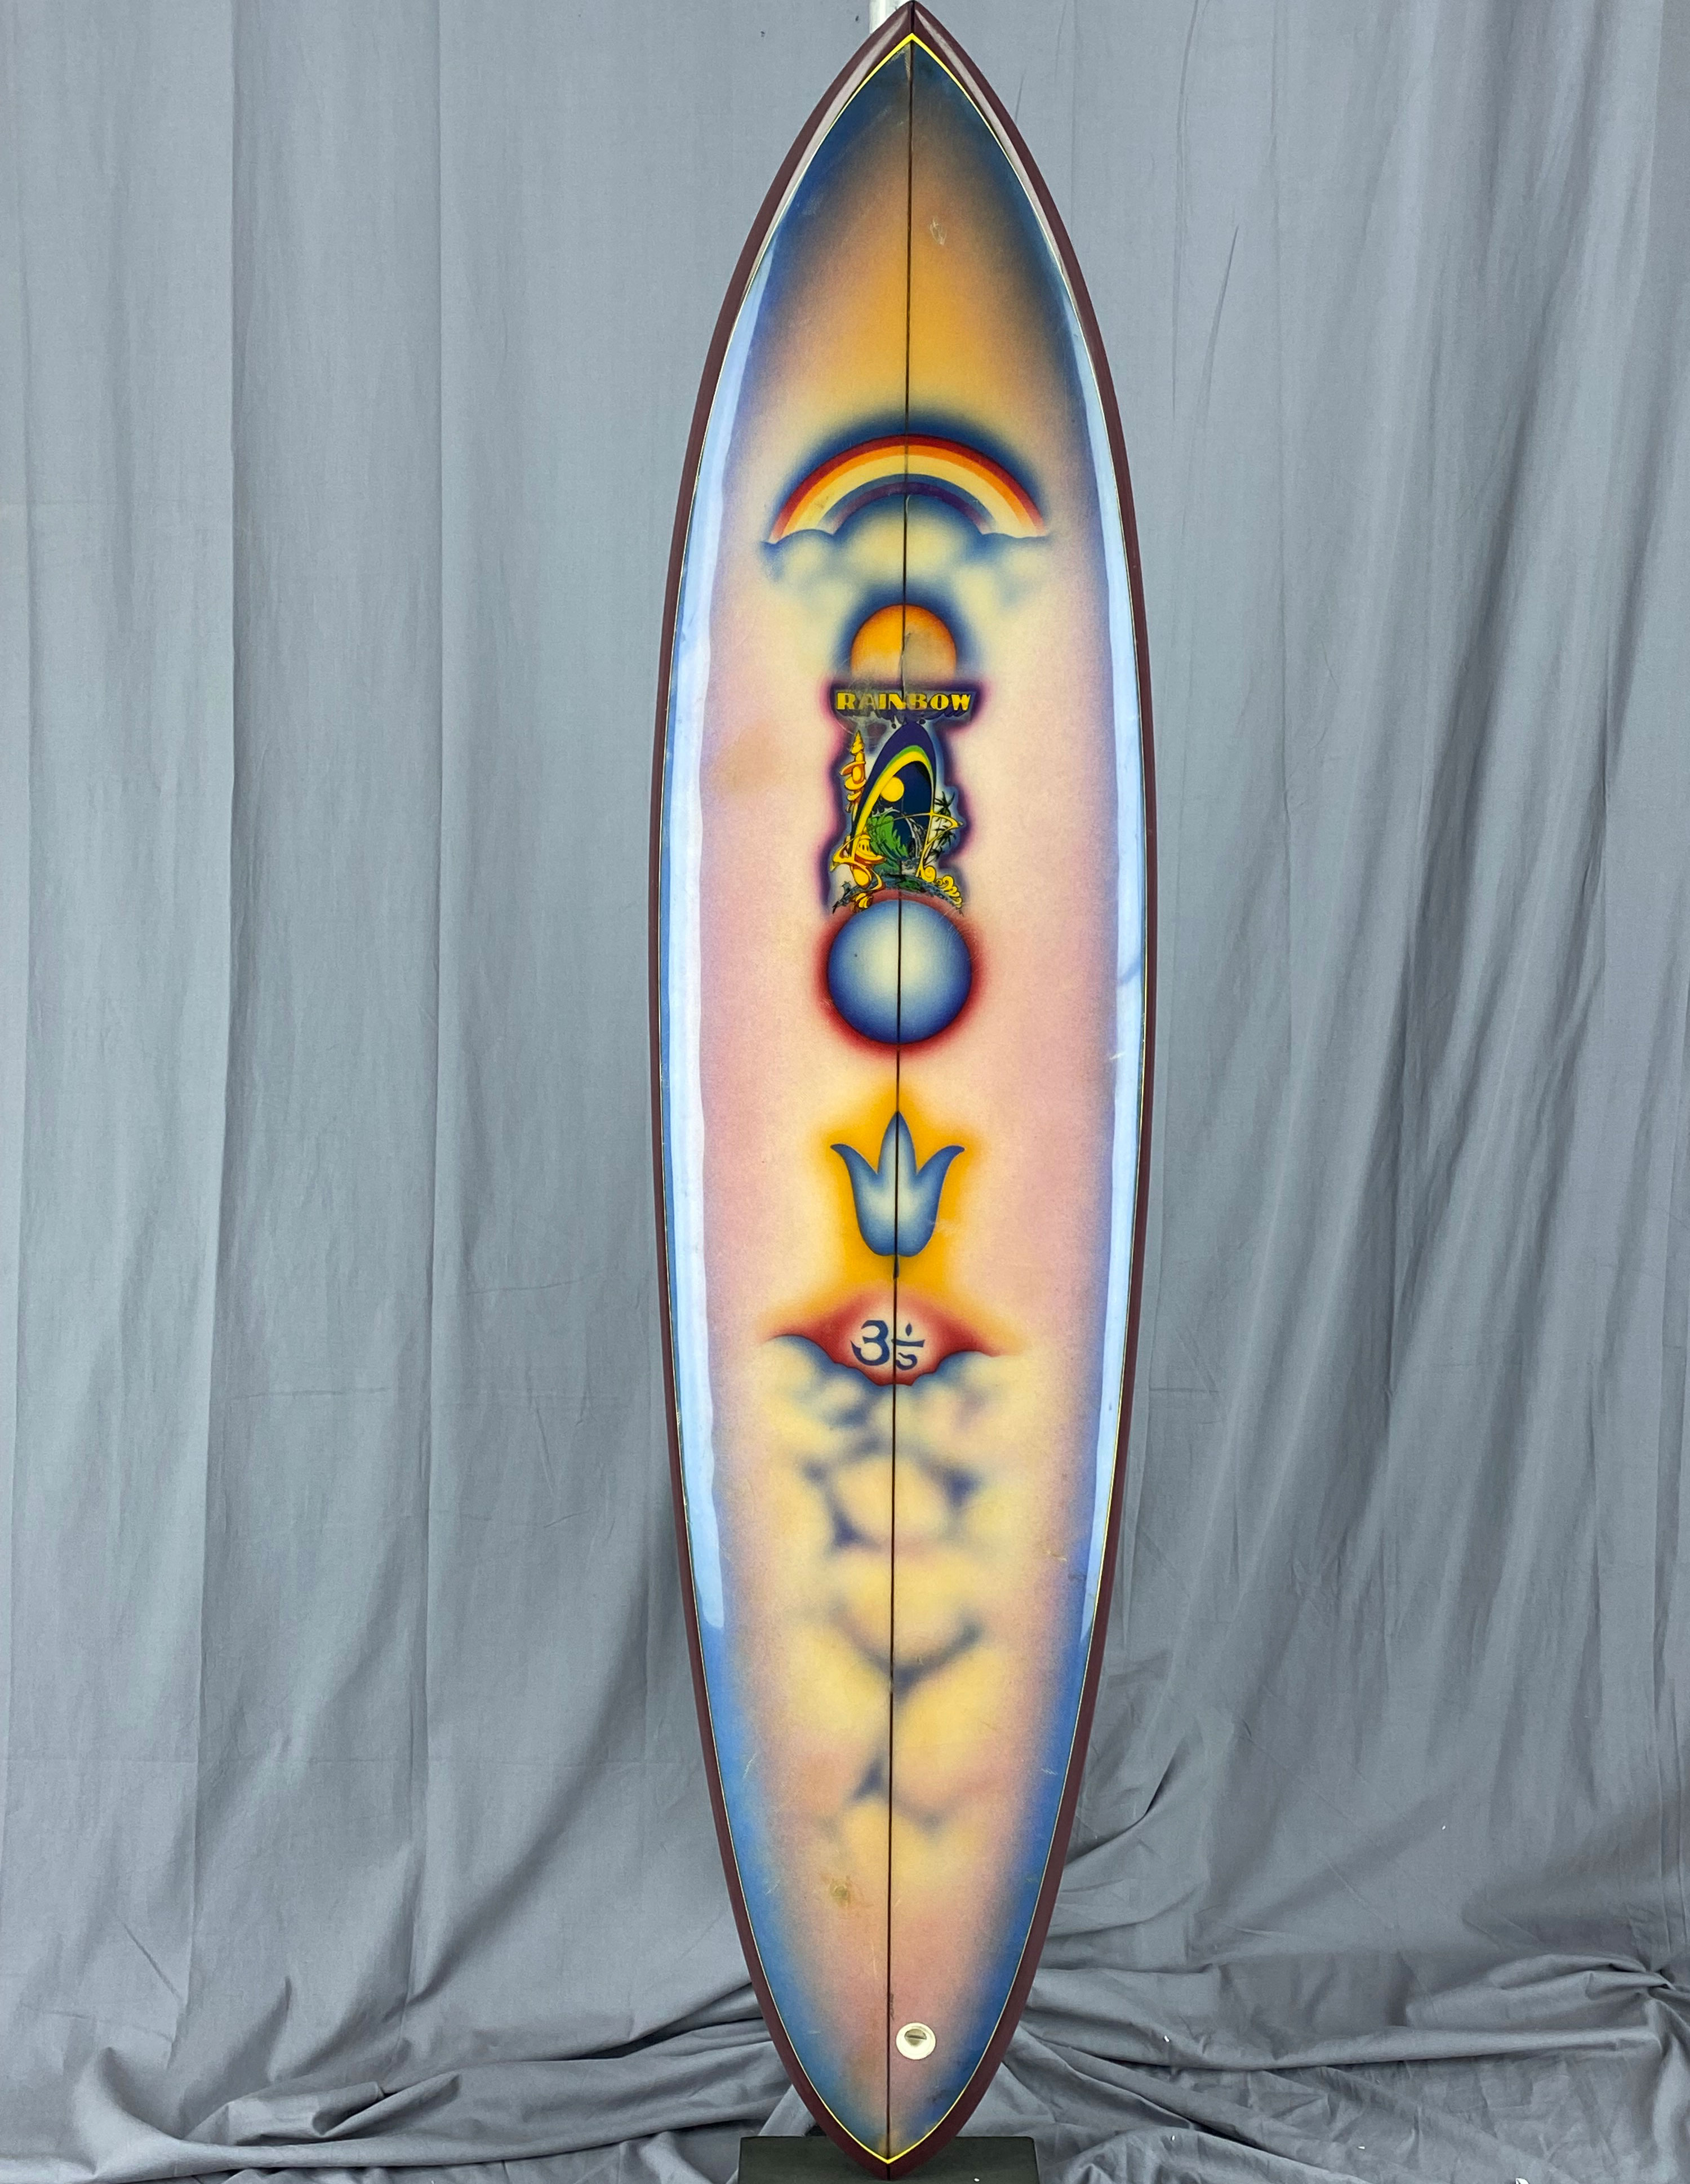 1970 Mike Hynson Rainbow Surfboard - Counter Culture Set